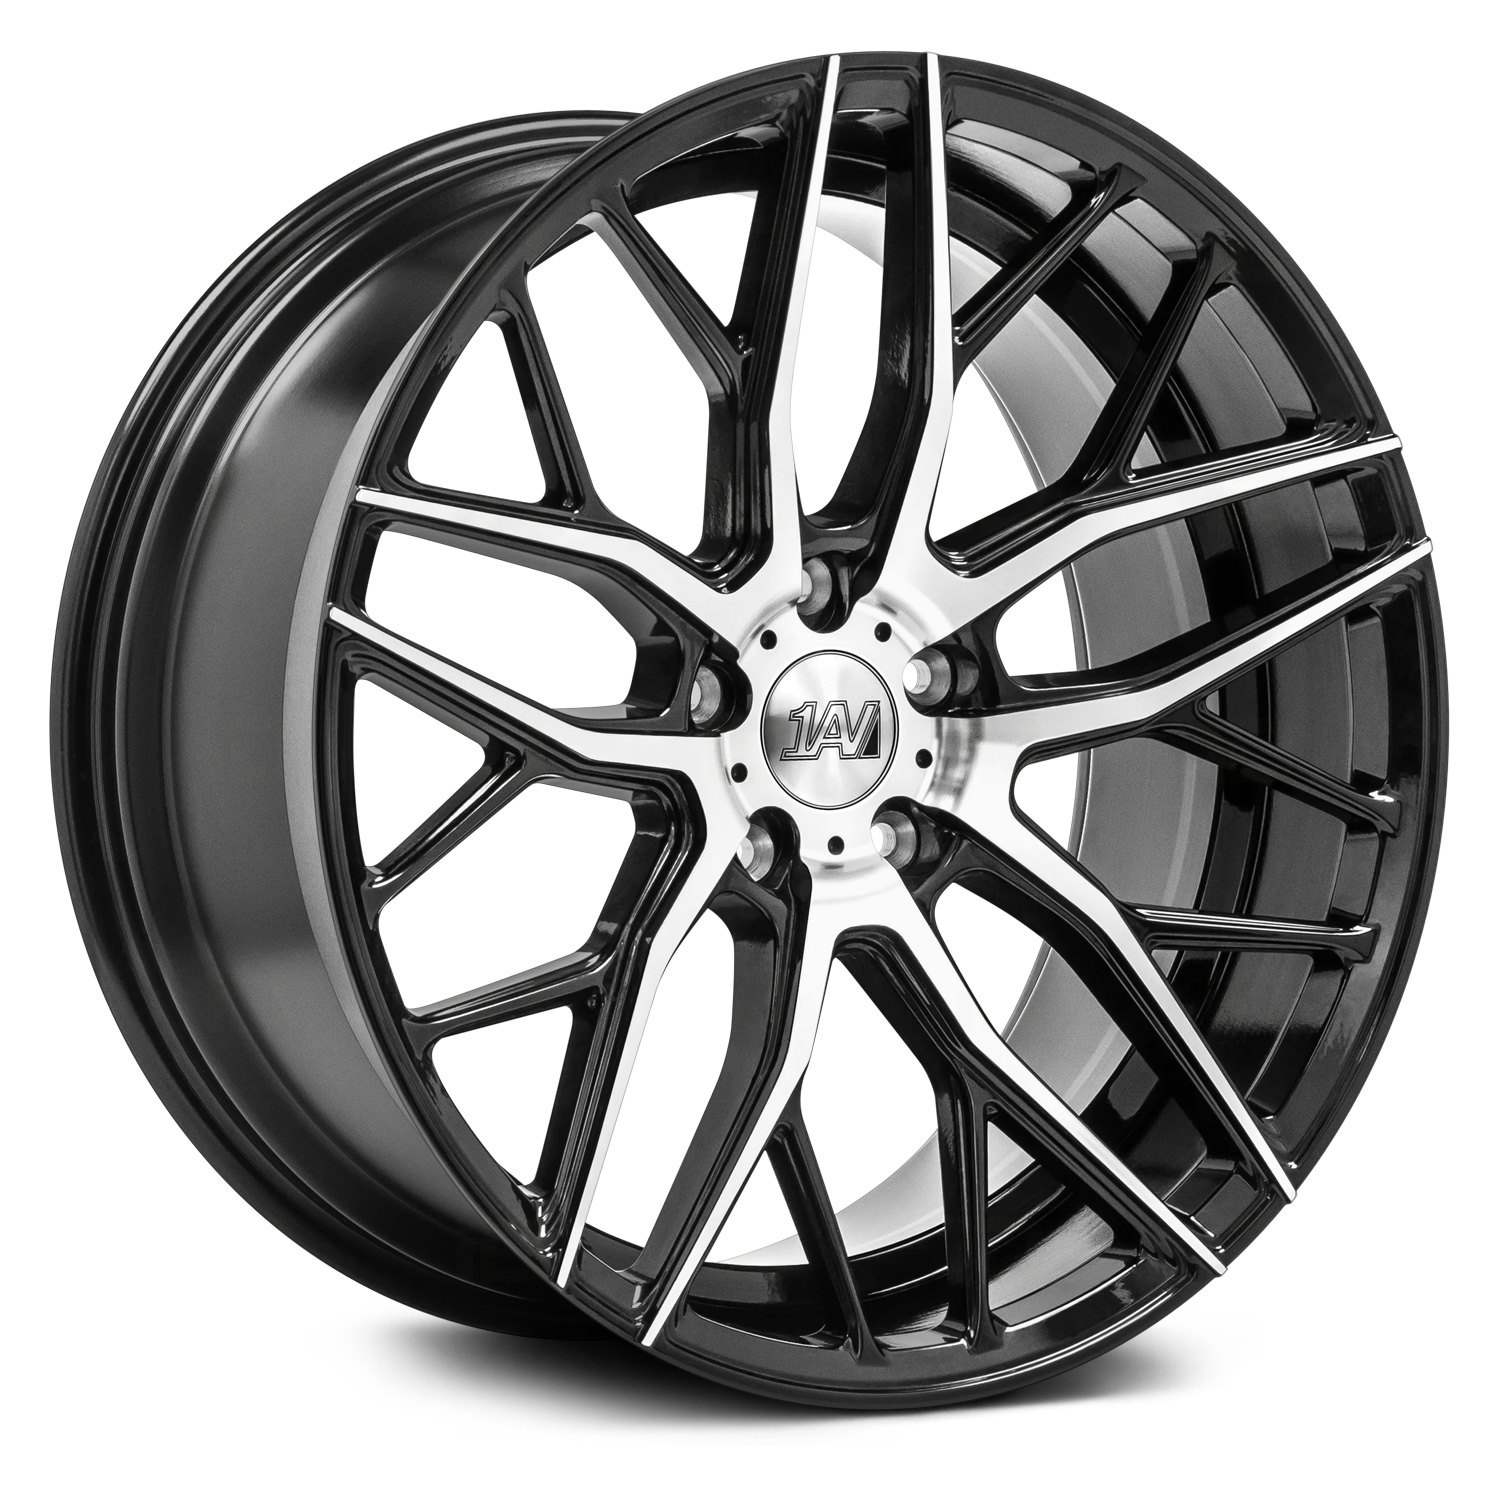 1AV® ZX11 Wheels - Gloss Black with Polished Face Rims 